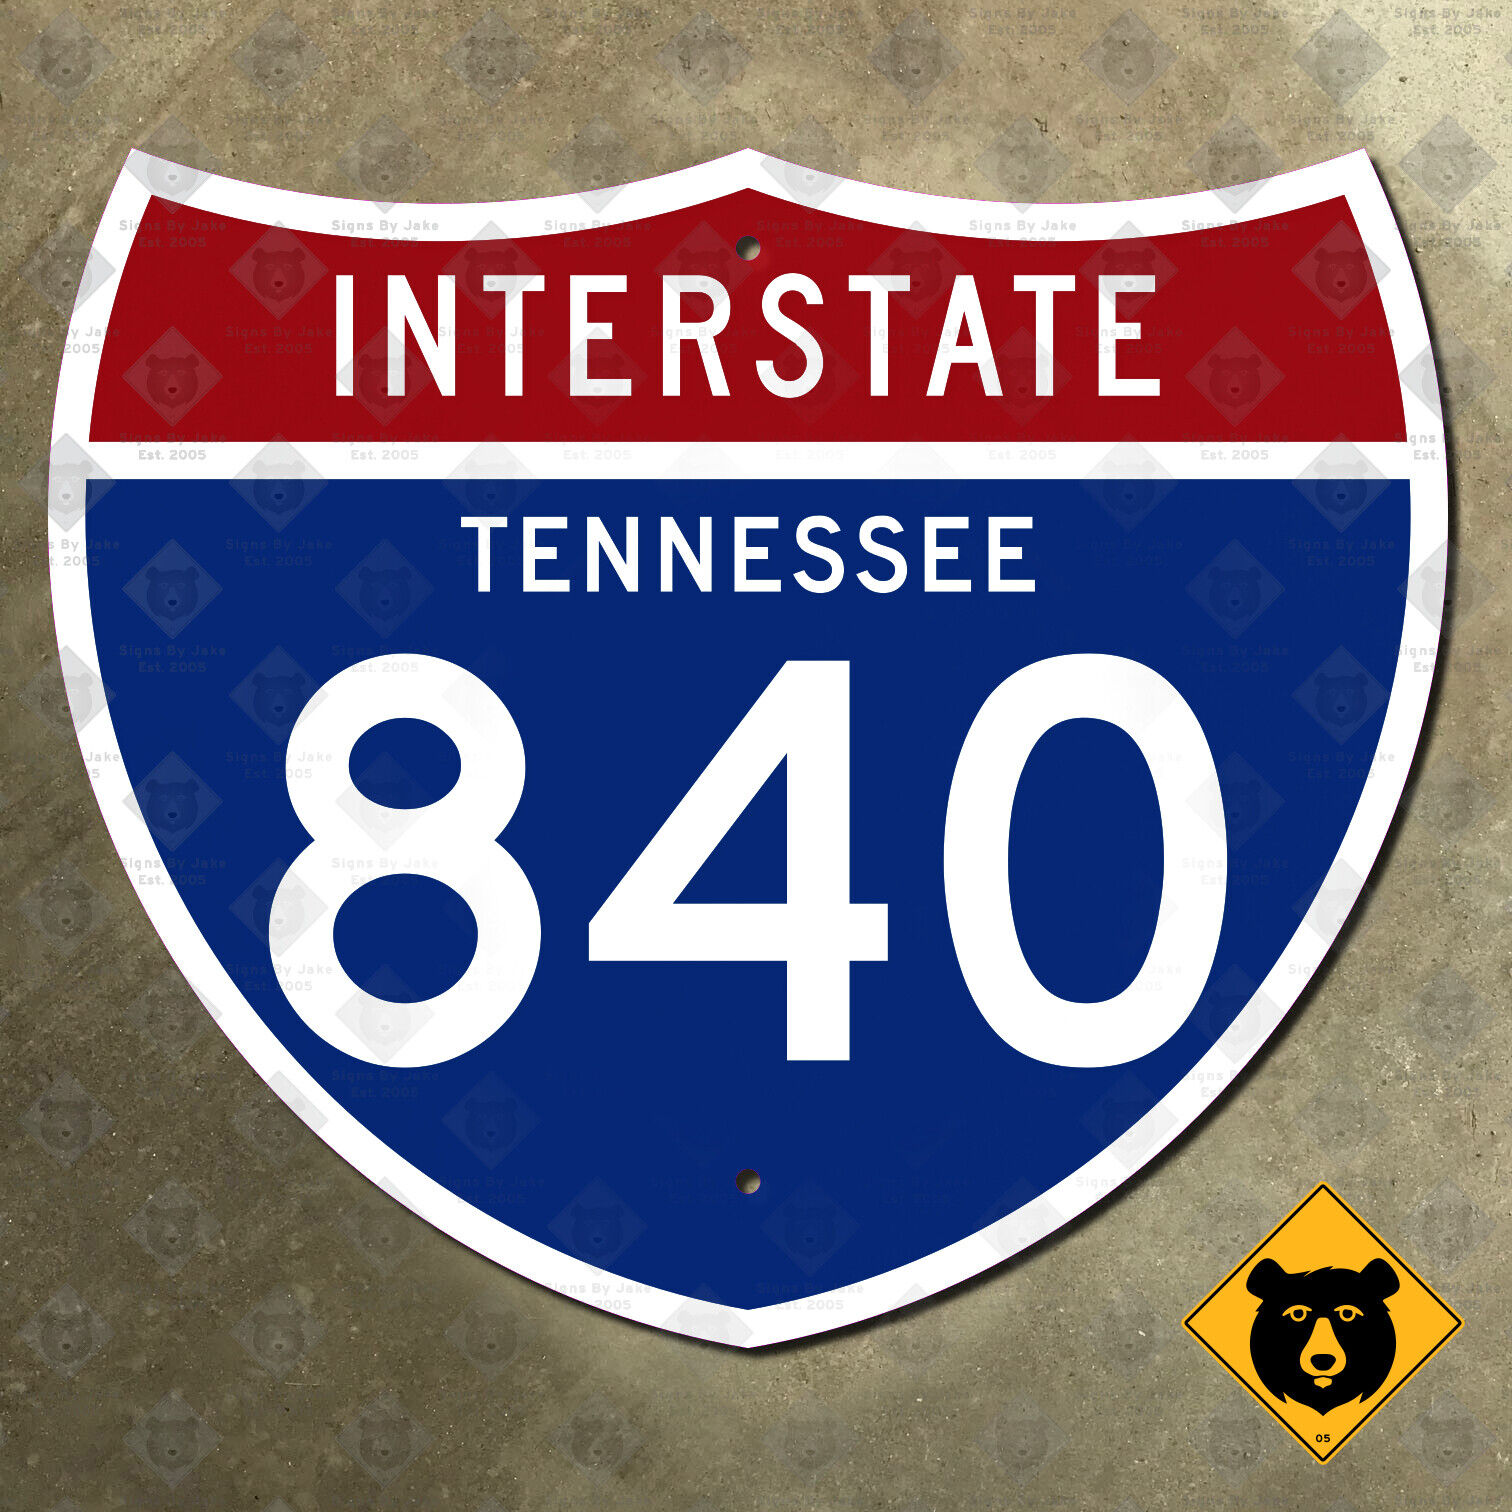 Tennessee Interstate 840 highway marker road sign Murfreesboro Lebanon 21x18